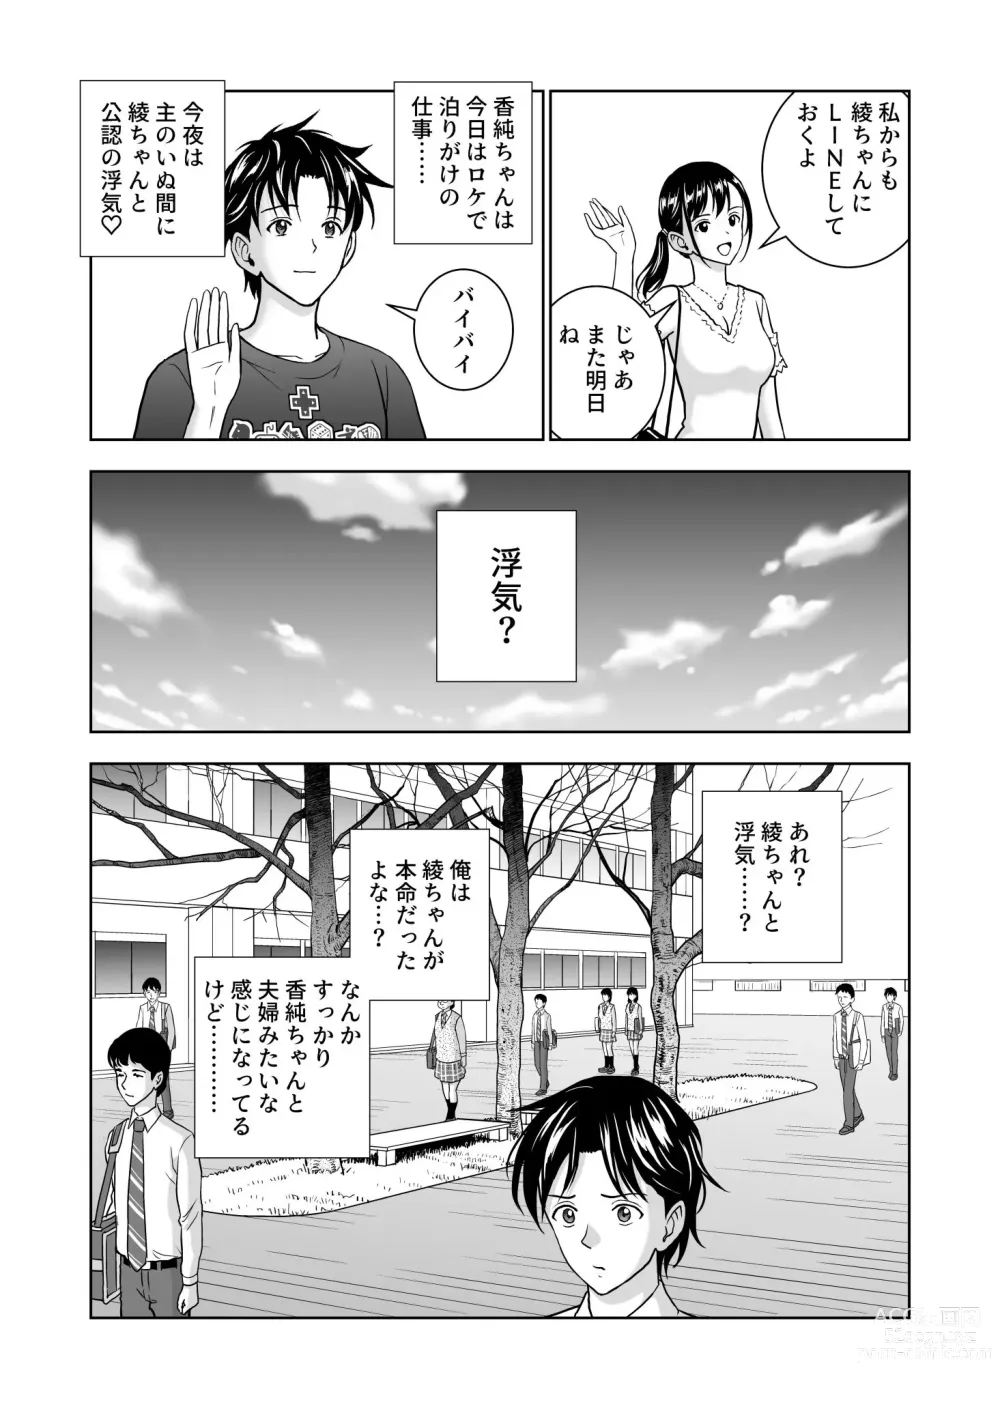 Page 84 of doujinshi Haru Kurabe 5